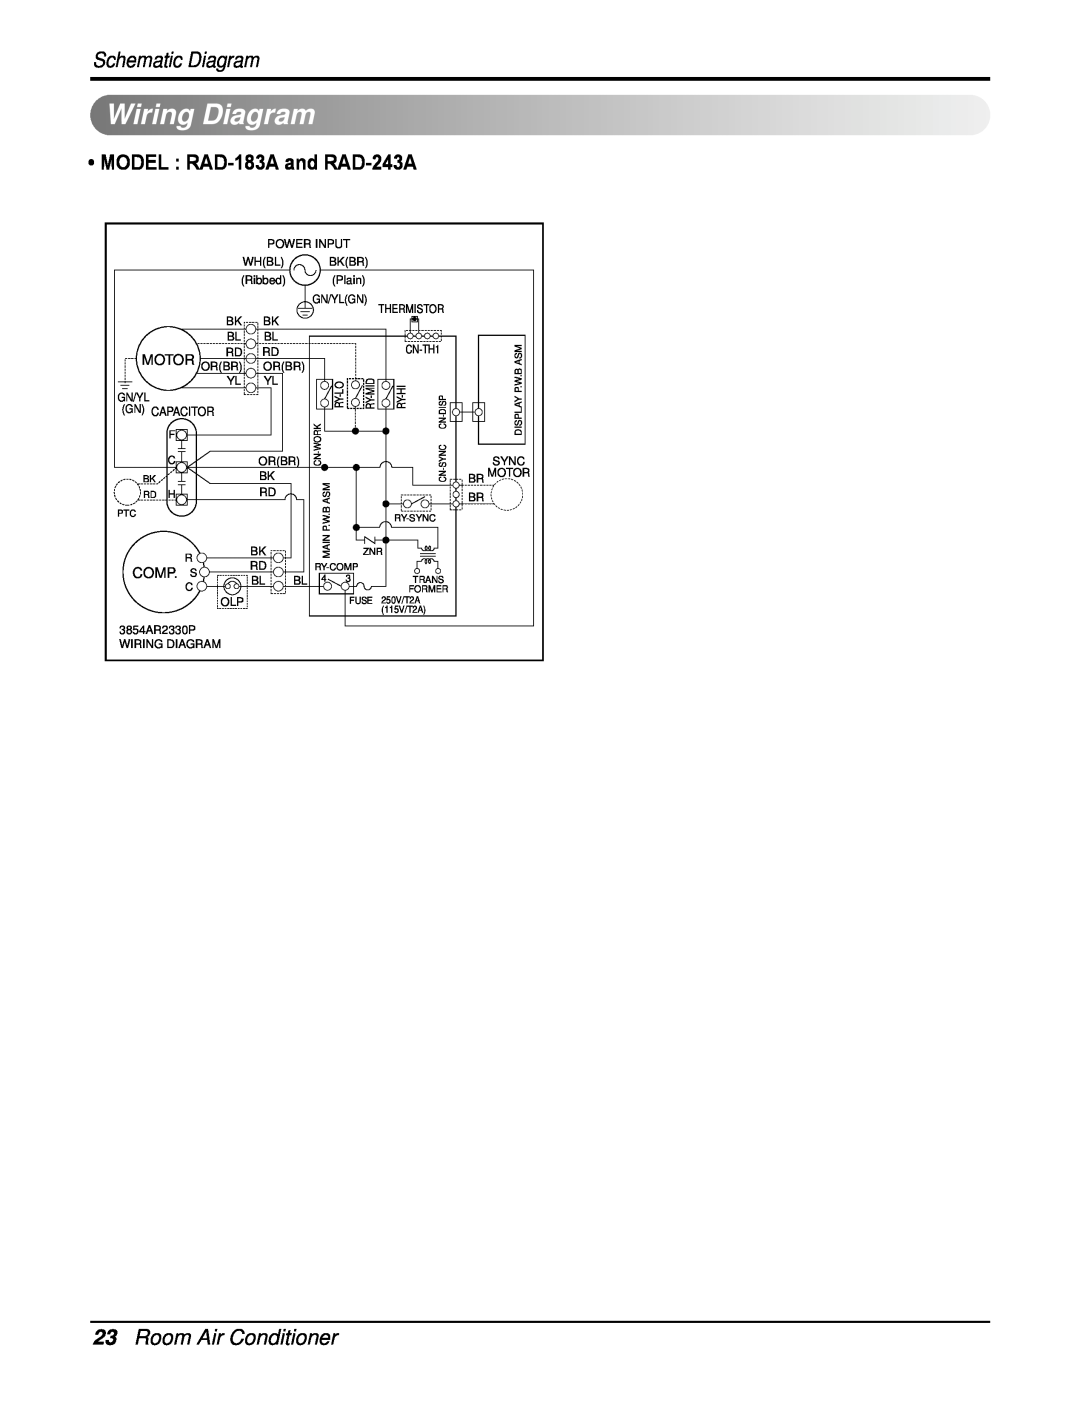 Heat Controller RAD-183A, RAD-243A service manual Wiring Diagram, 23Room Air Conditioner, Schematic Diagram 